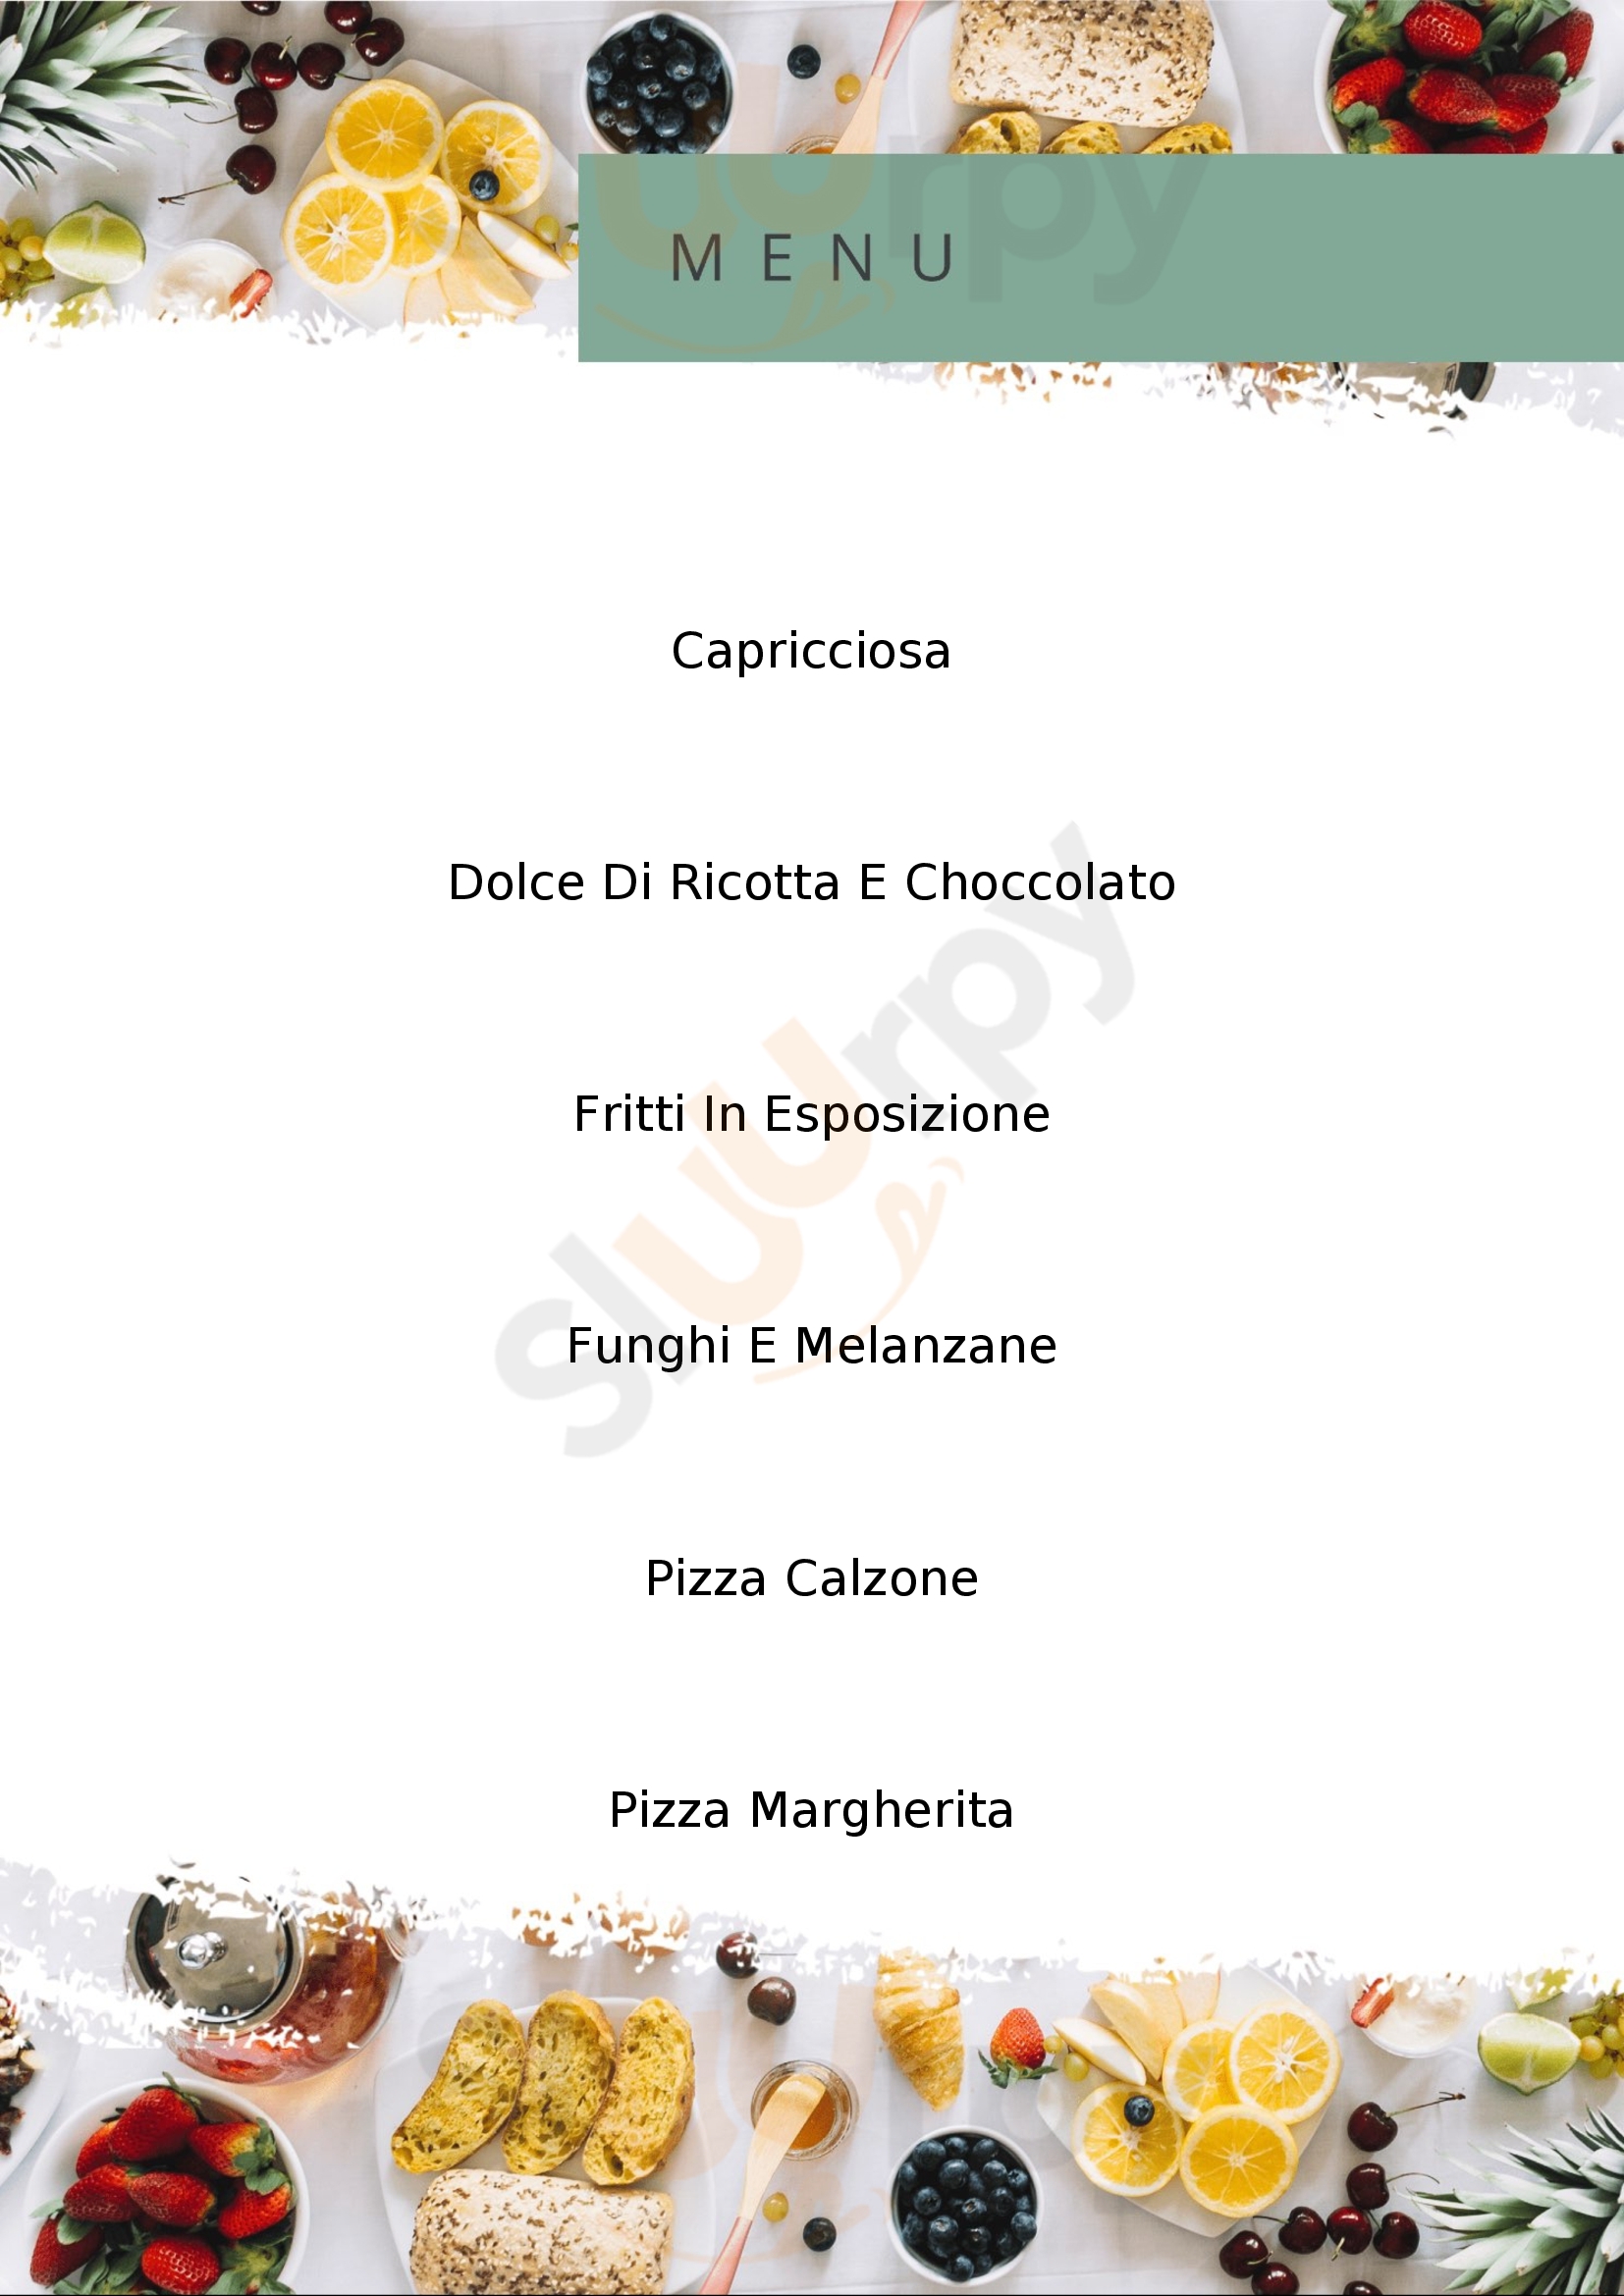 Pizzamania Lido di Ostia menù 1 pagina